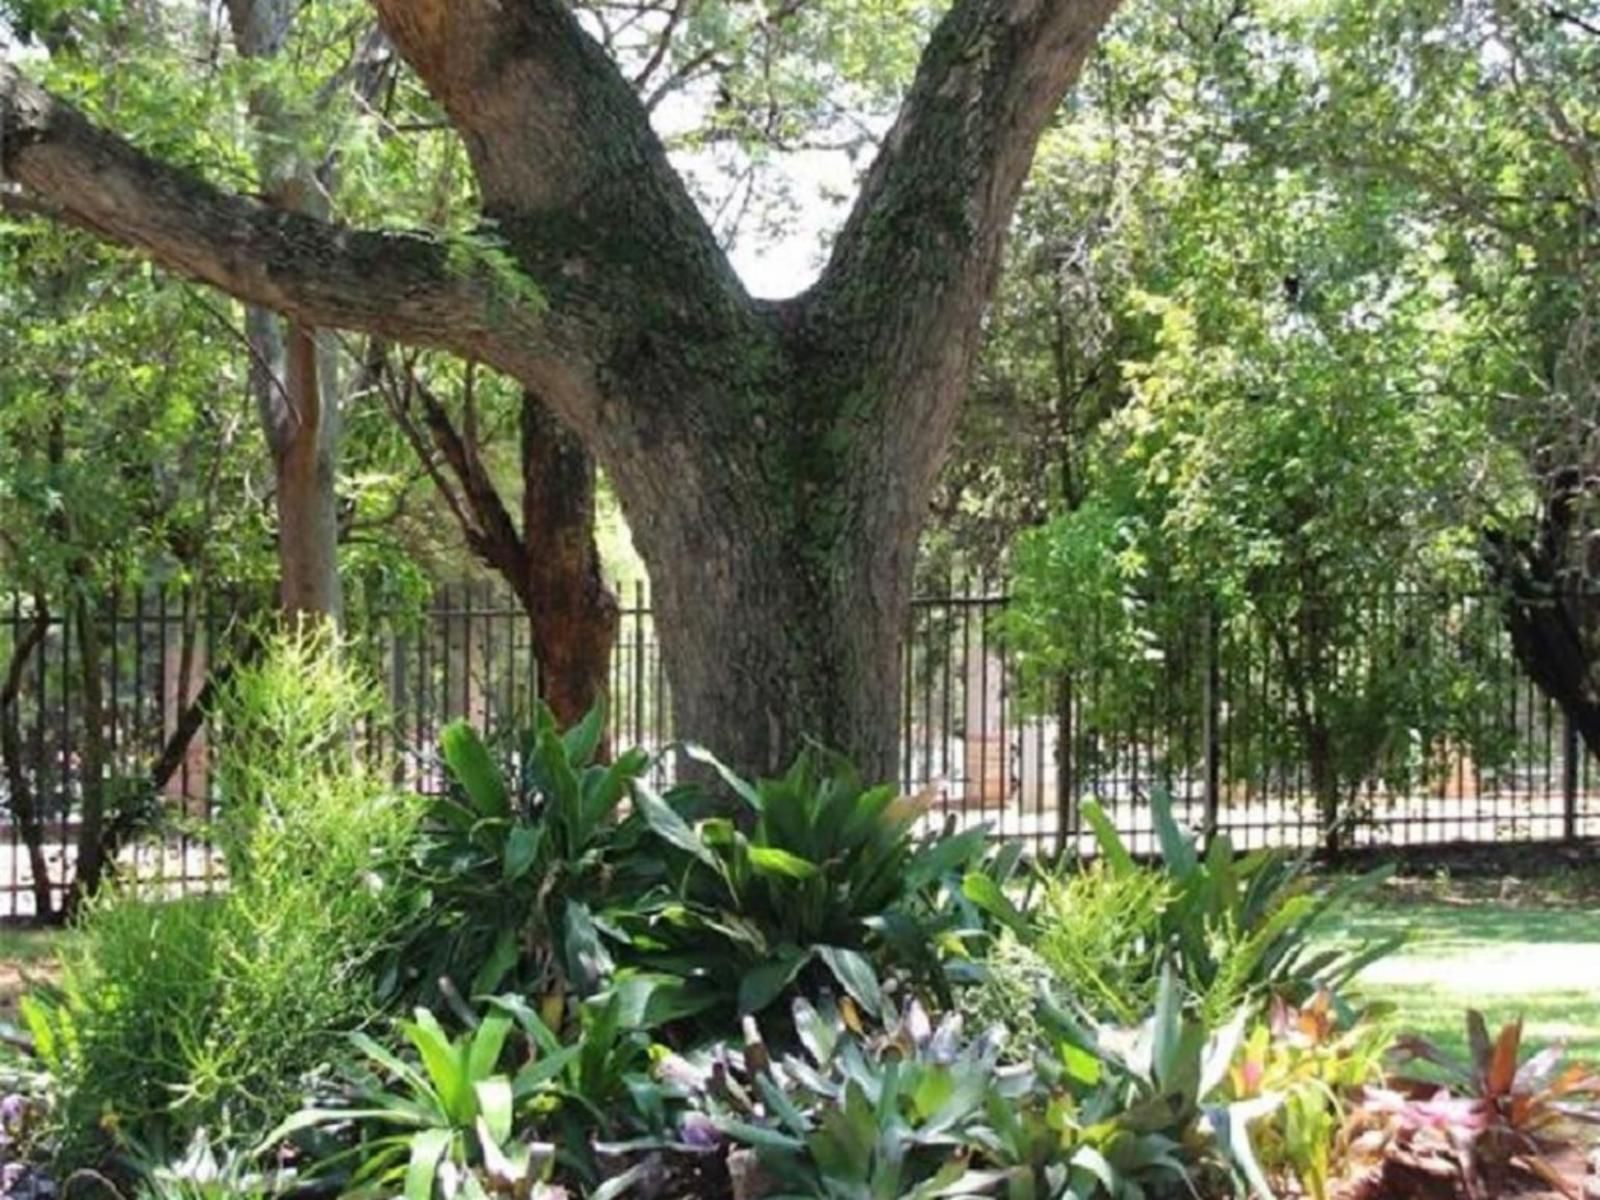 Mirisa S Guest House Florauna Pretoria Tshwane Gauteng South Africa Plant, Nature, Tree, Wood, Garden